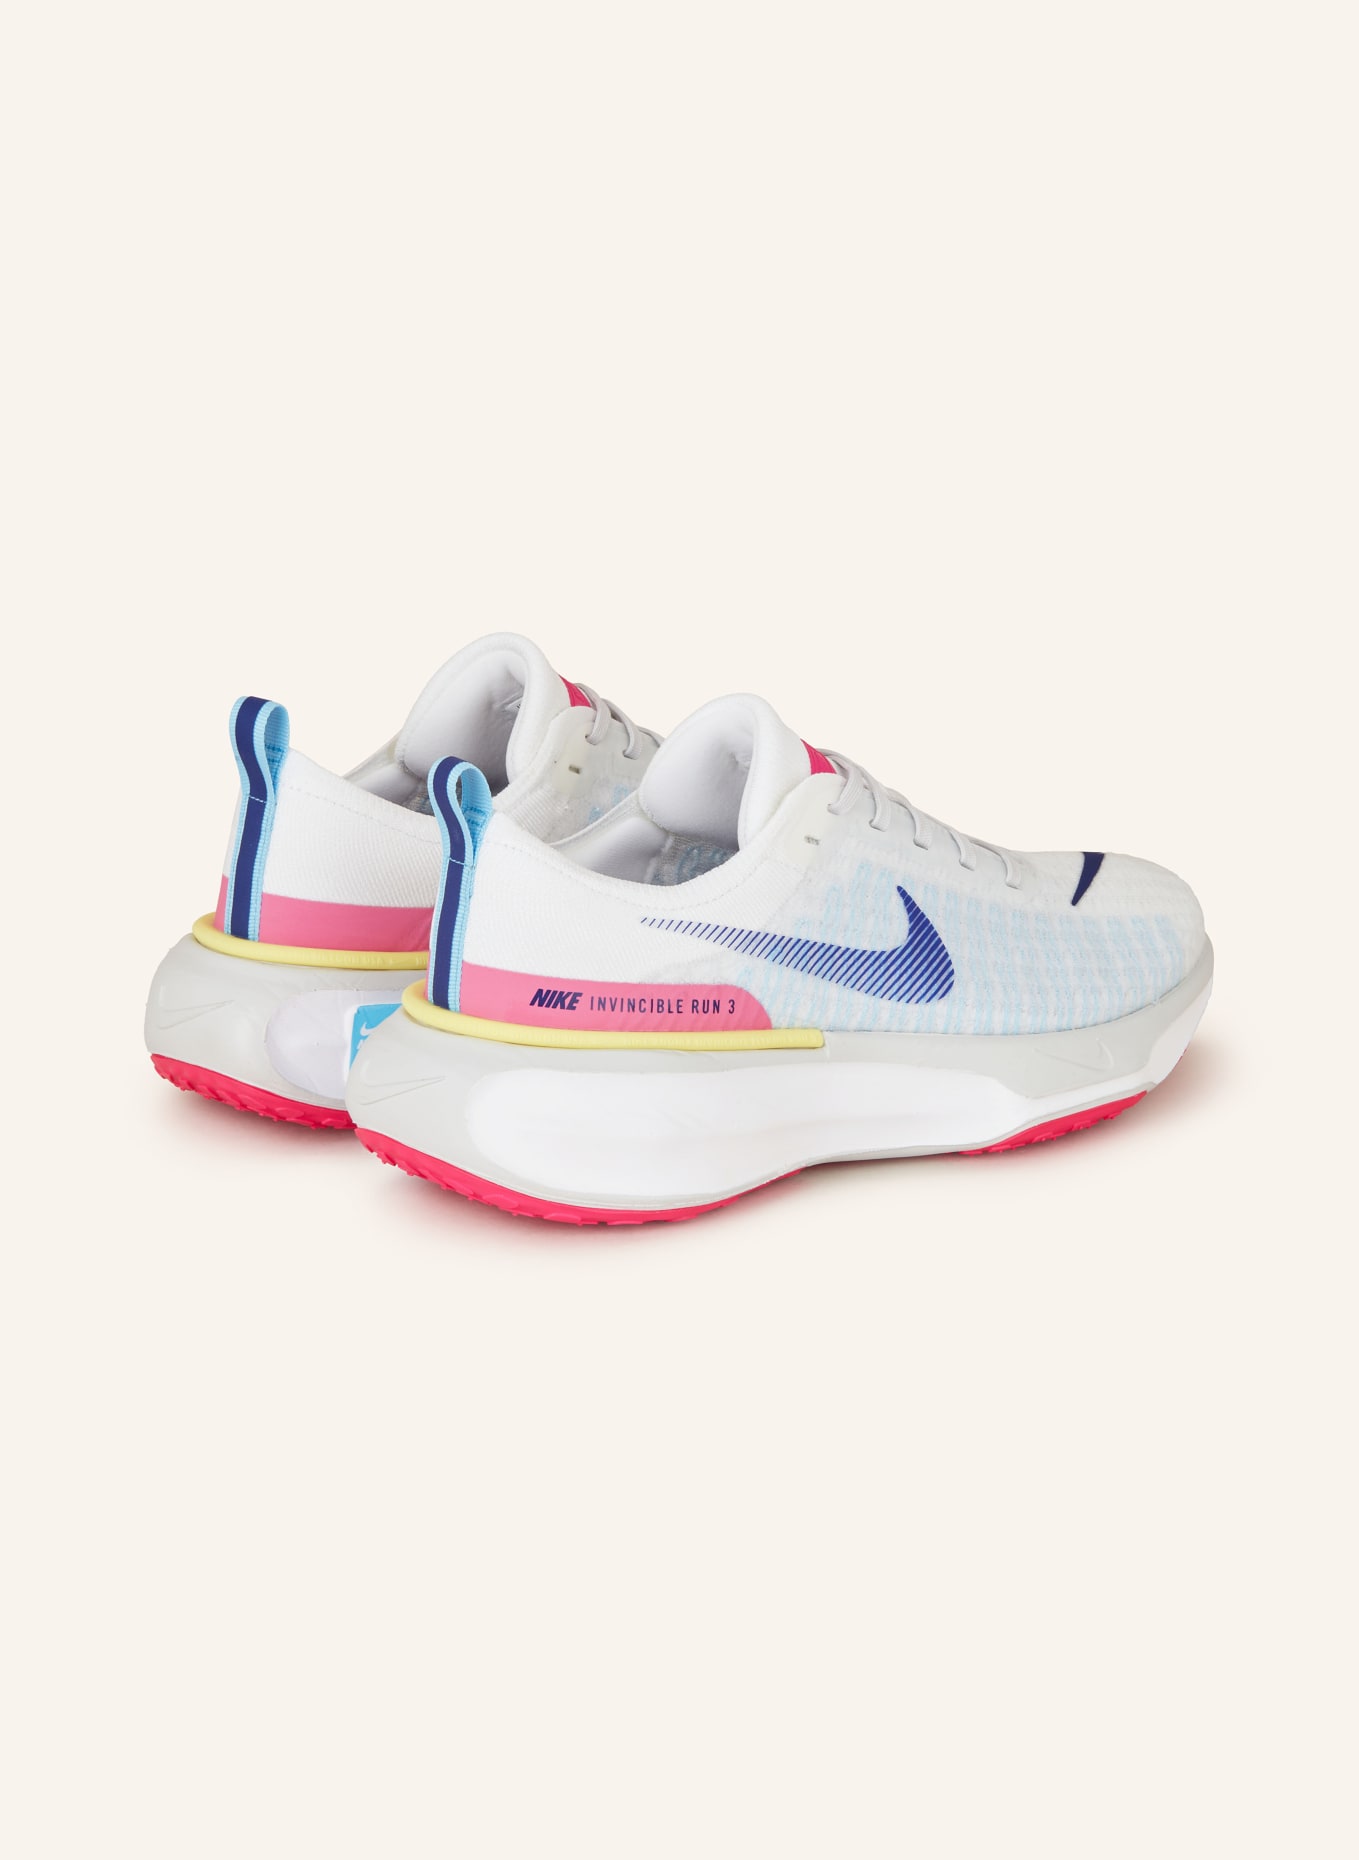 Nike Laufschuhe INVINCIBLE 3, Farbe: WEISS/ BLAU/ PINK (Bild 2)